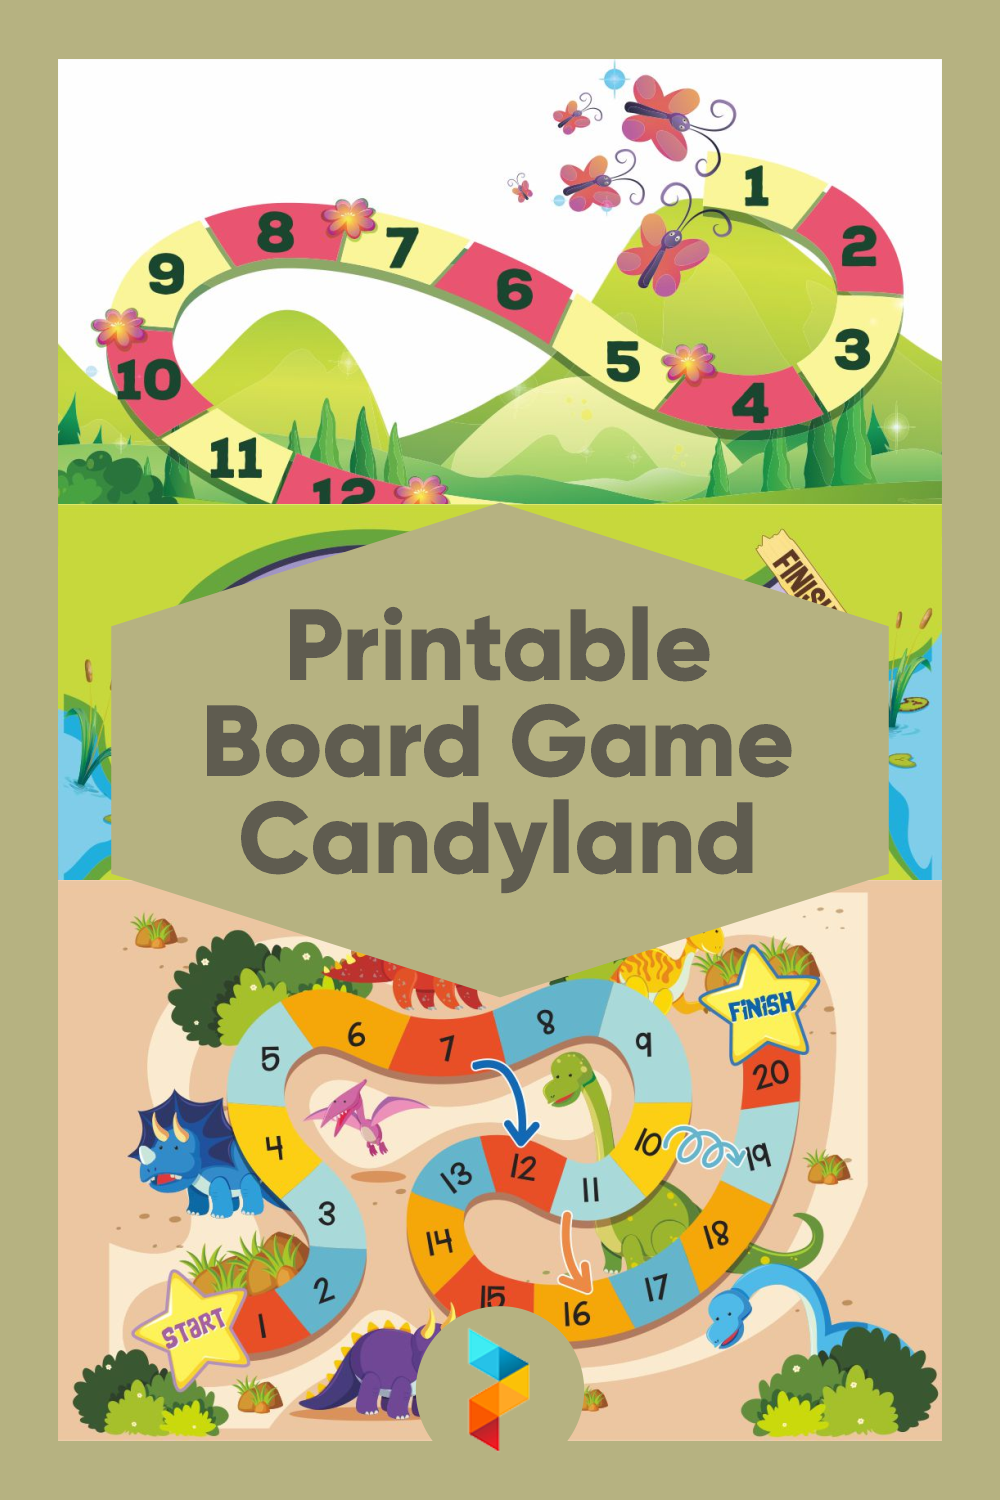 Printable Board Game Candyland